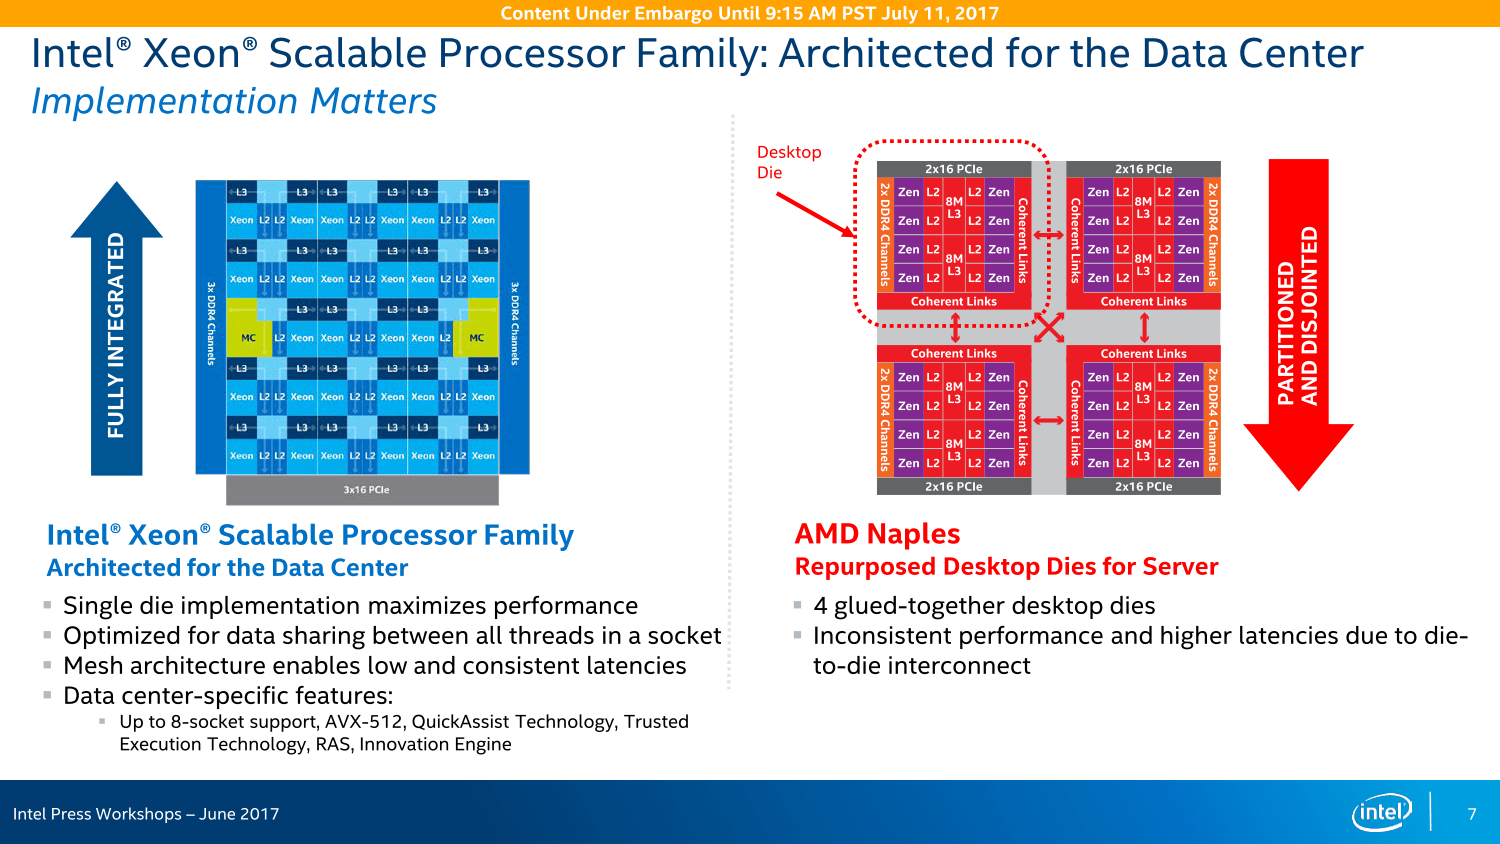 Intel Xeon SP vs. AMD Naples